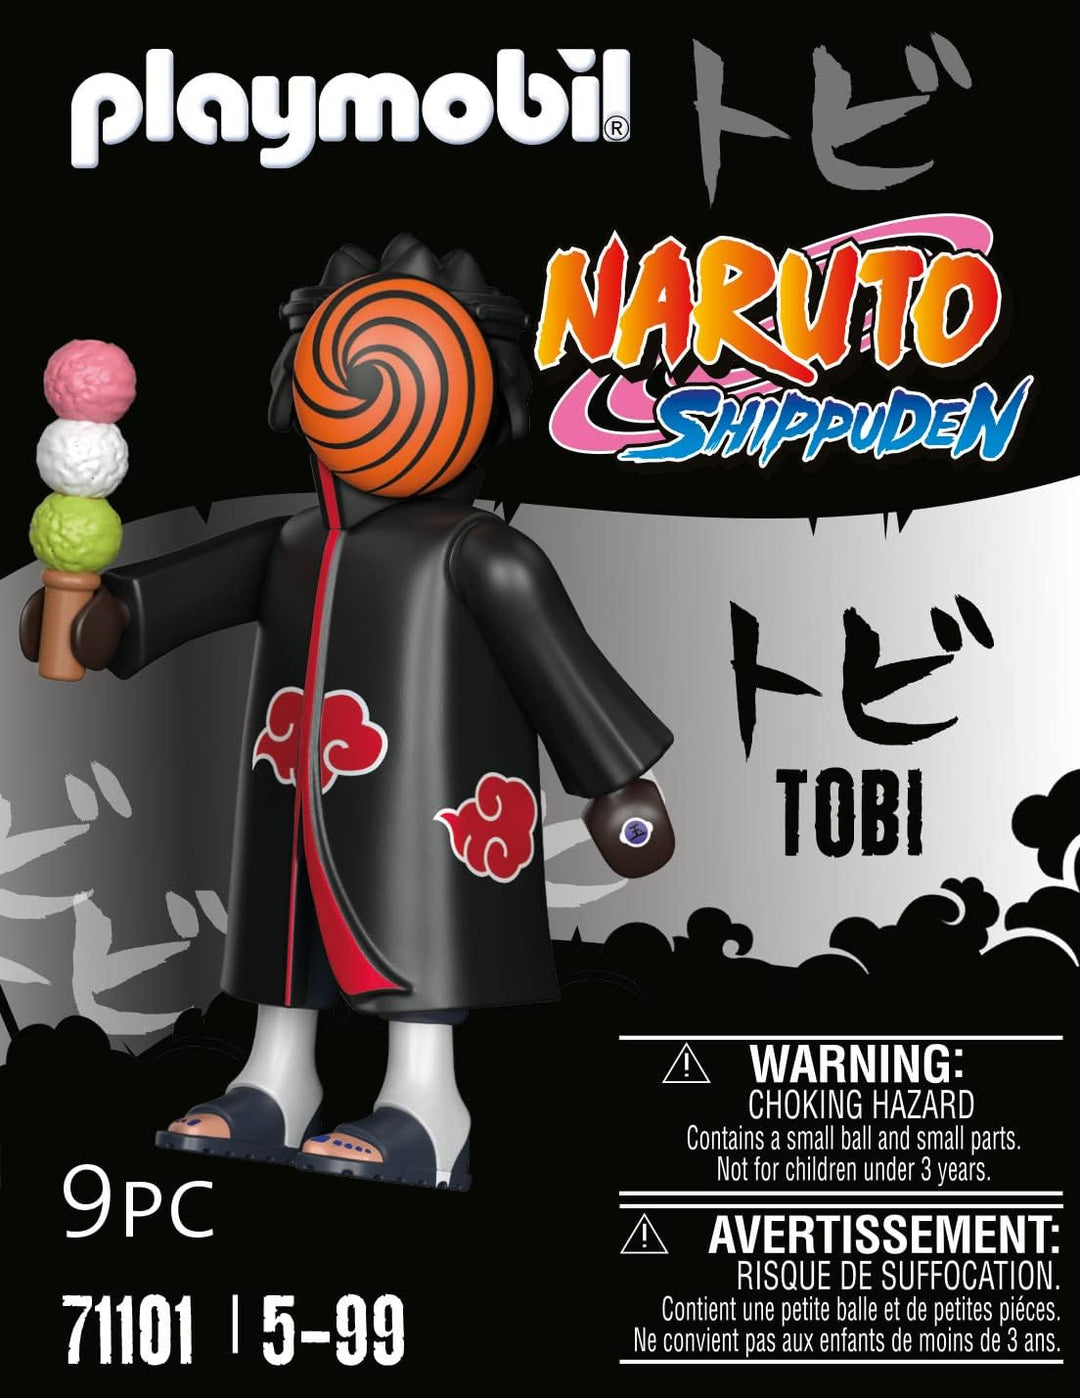 Playmobil 71101 Naruto: Tobi Figure Set, Naruto Shippuden anime collectors Figure